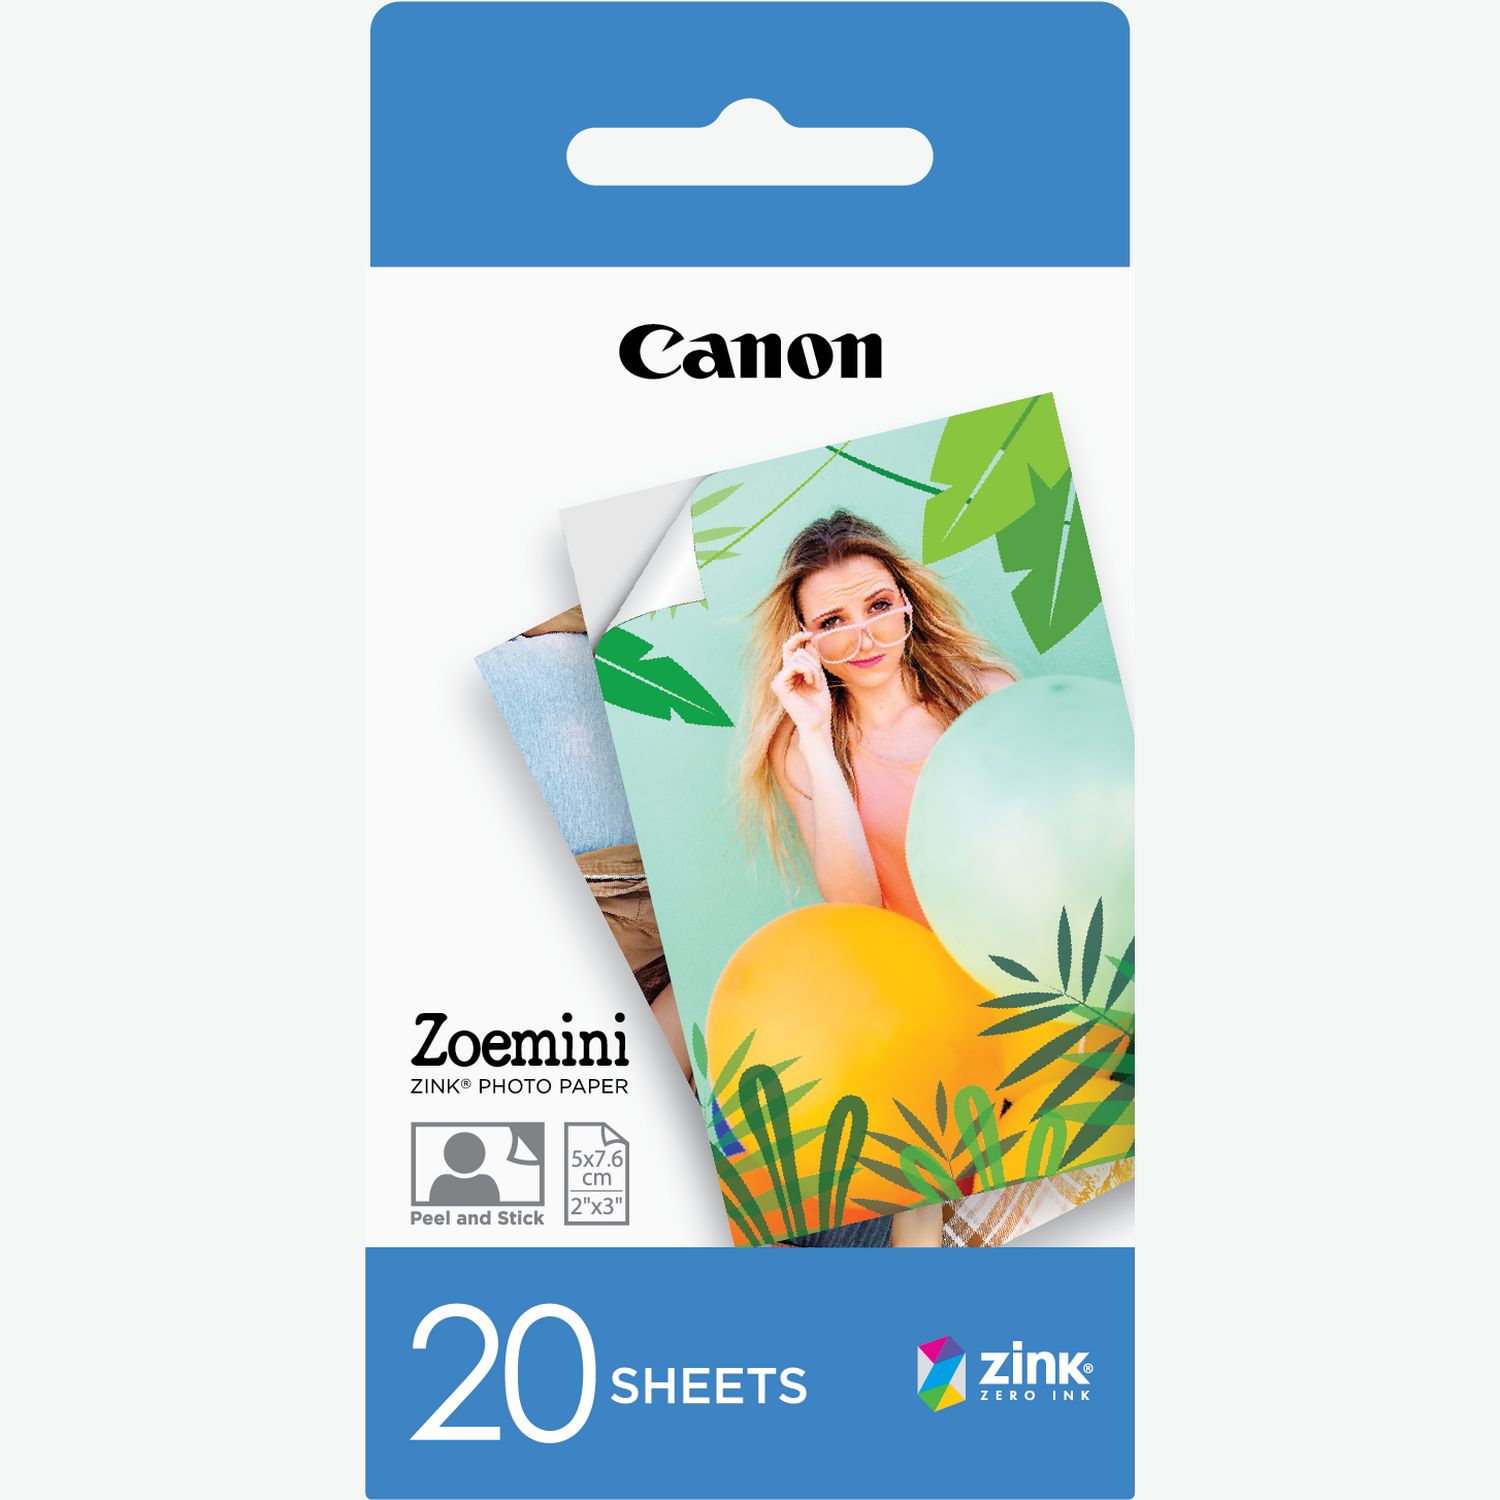 Canon ZINK Photo Paper